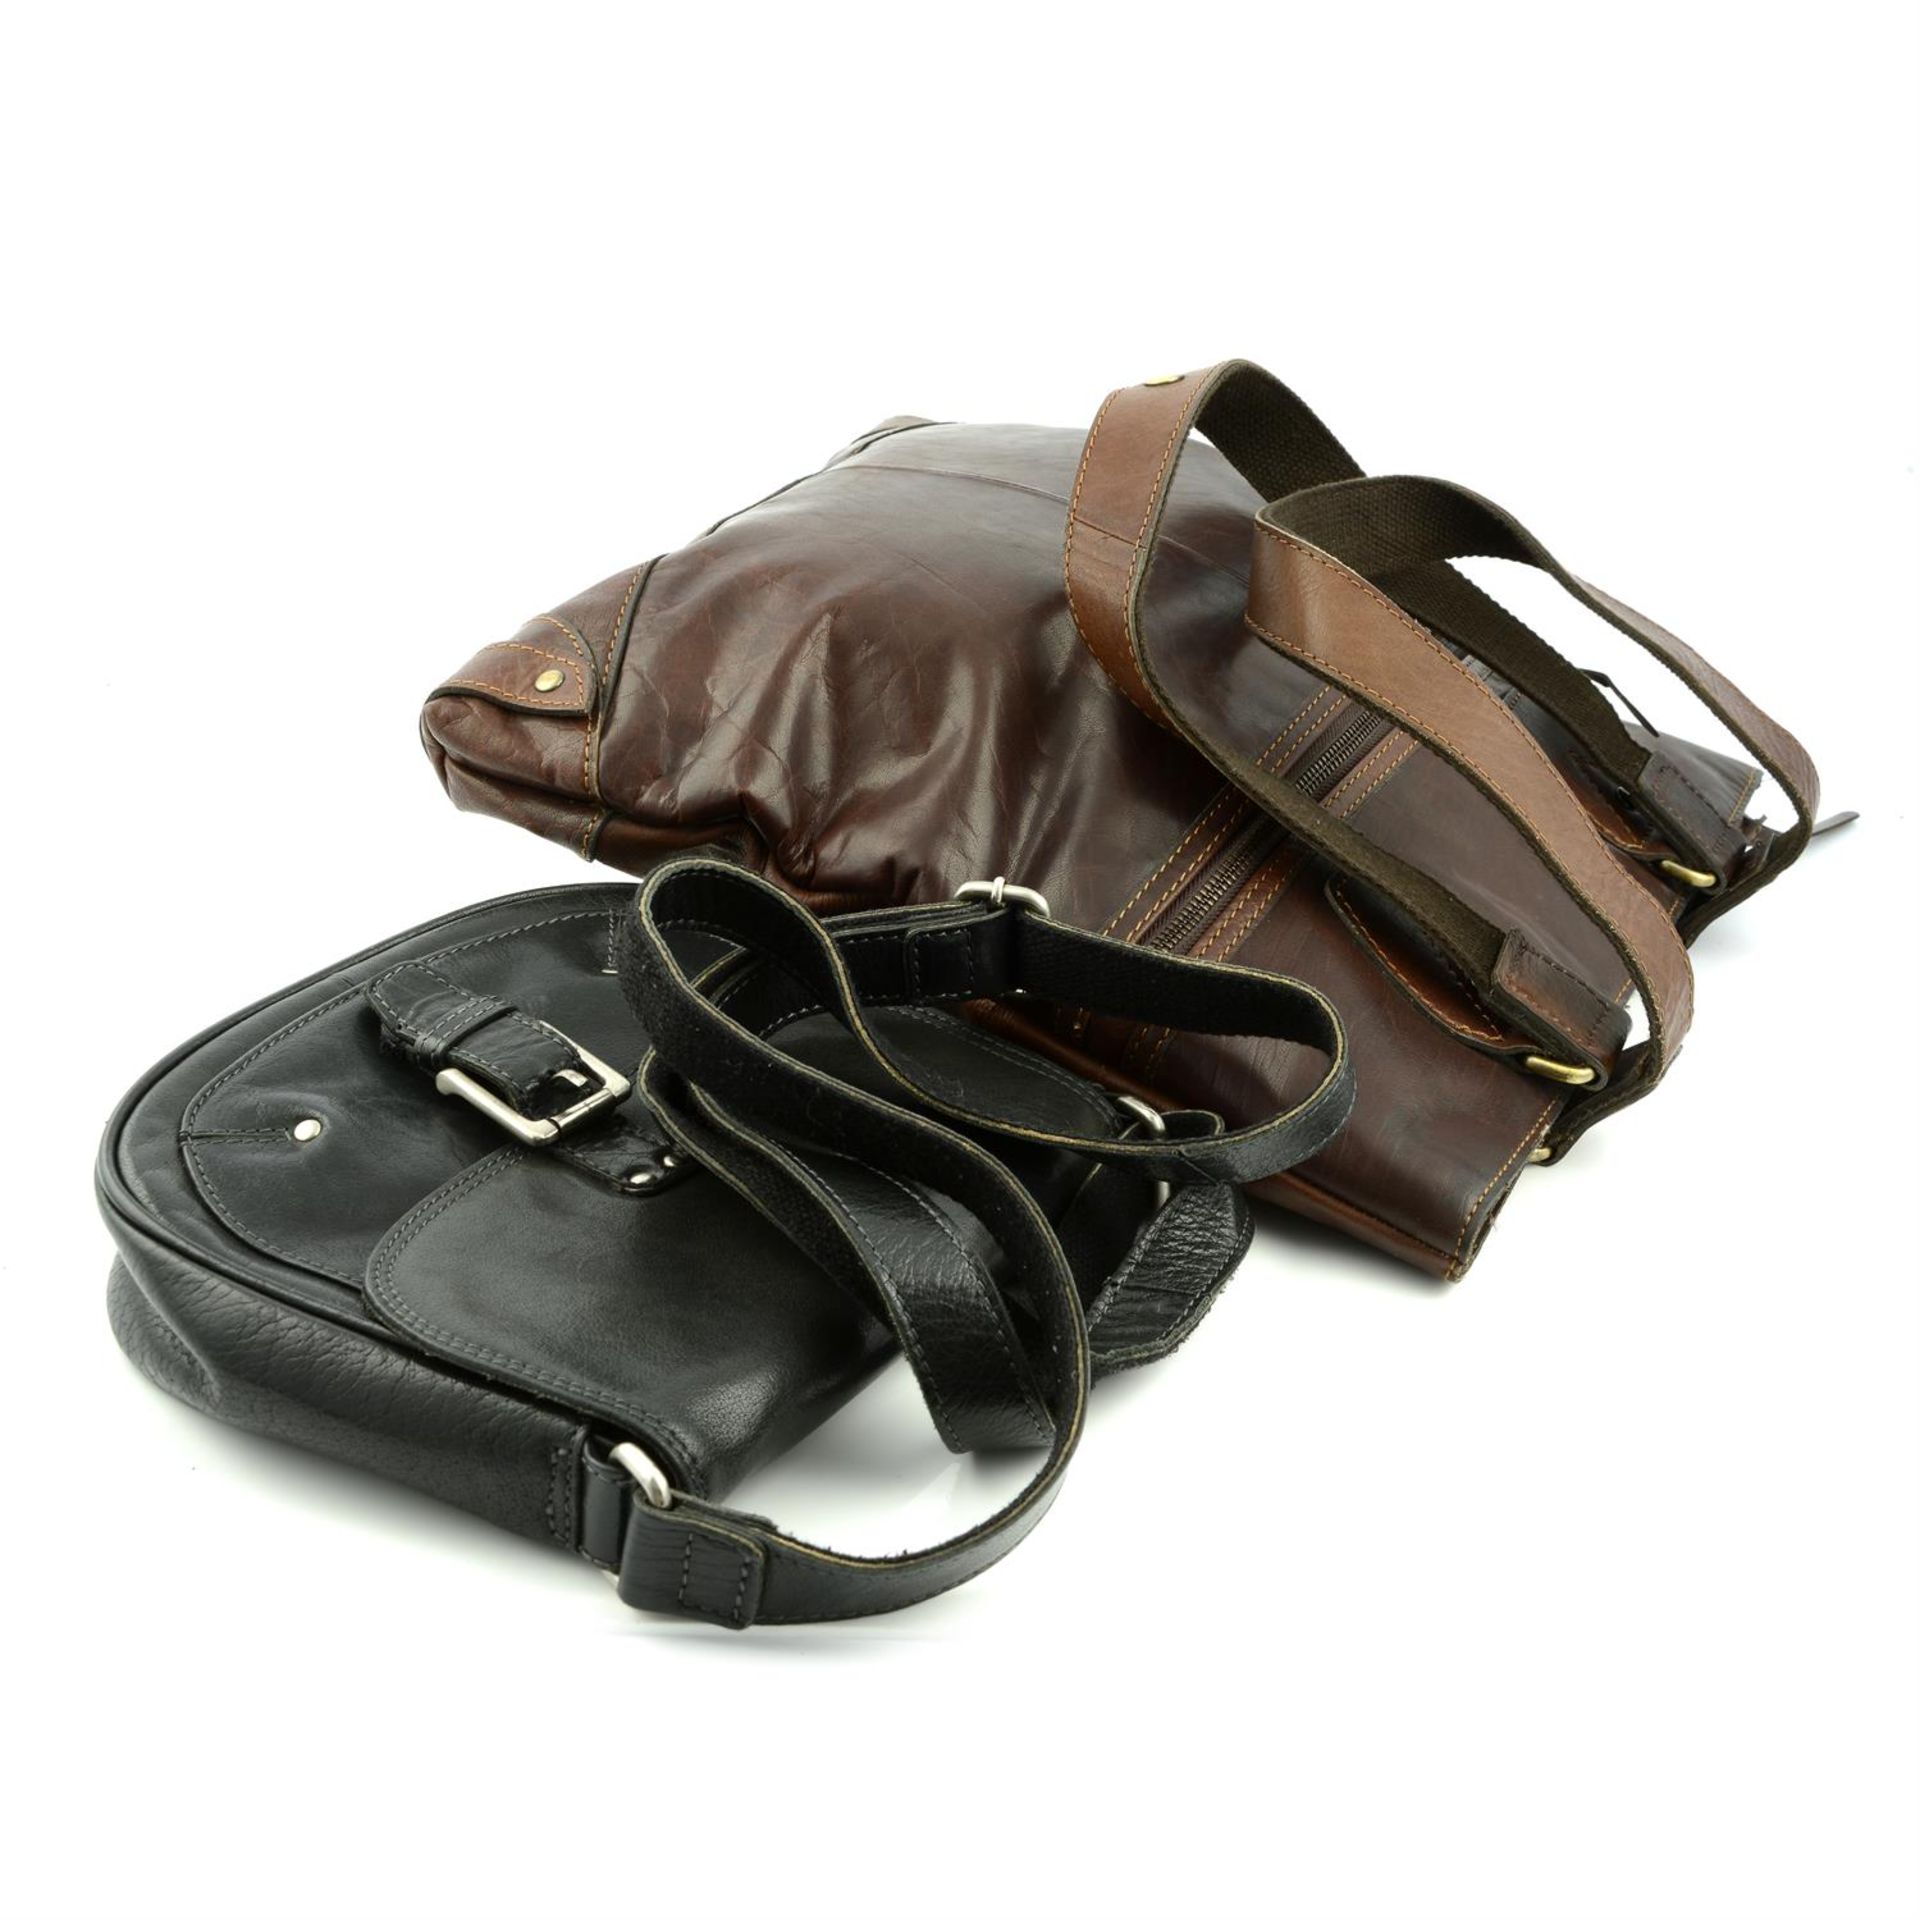 BOLLA - two handbags. - Image 3 of 3